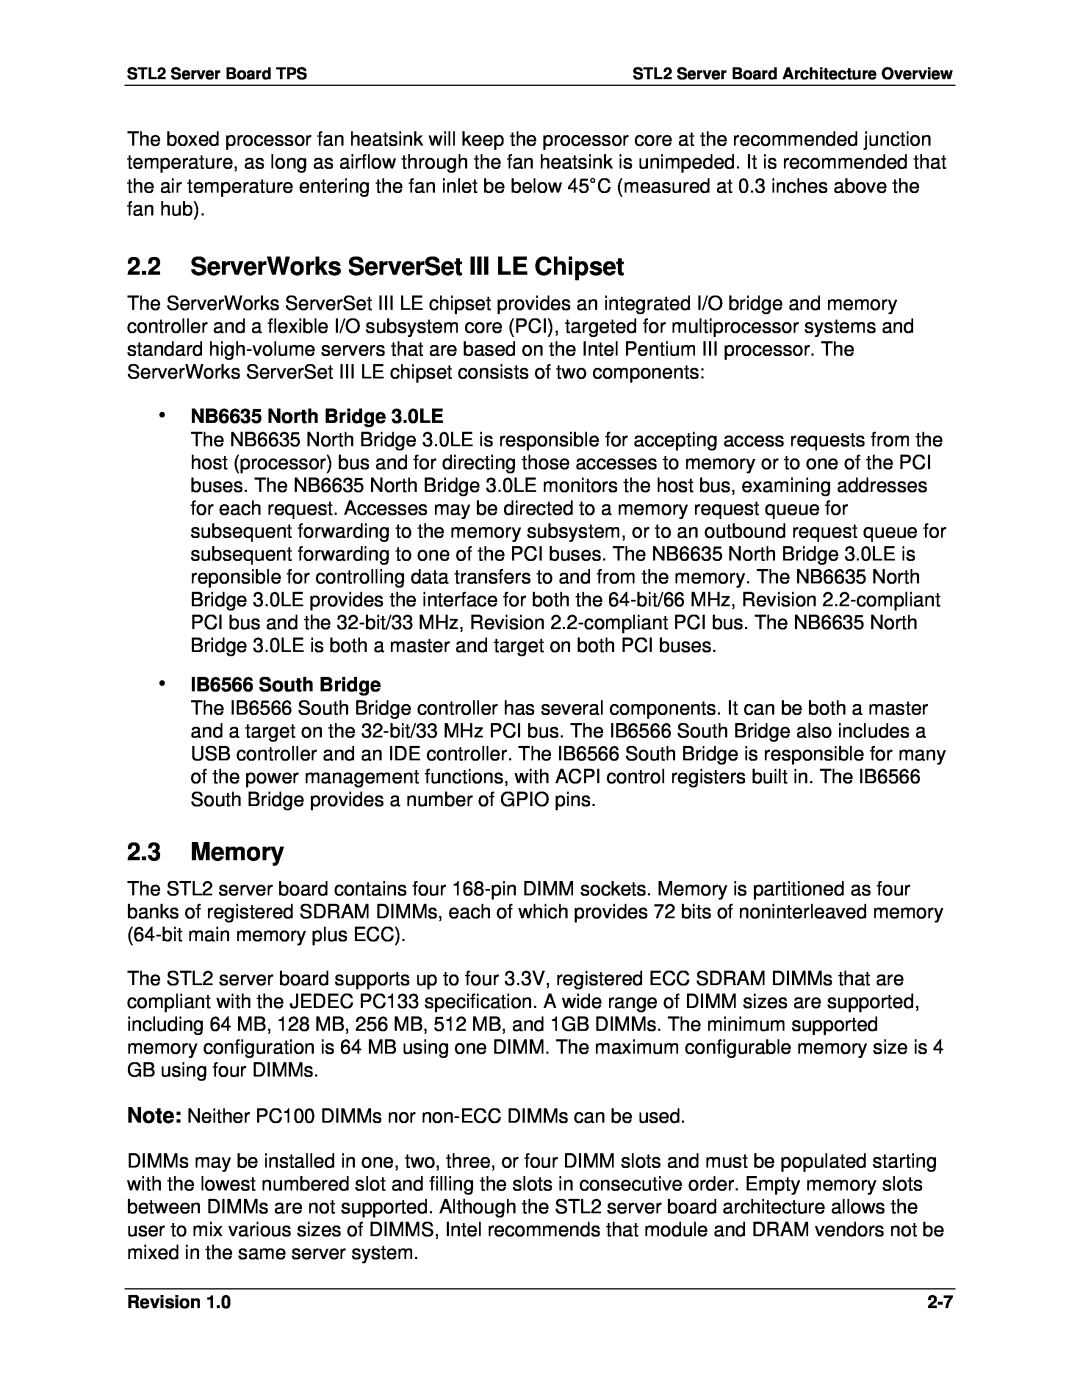 Intel STL2 manual 2.2ServerWorks ServerSet III LE Chipset, 2.3Memory, ∙NB6635 North Bridge 3.0LE, ∙IB6566 South Bridge 